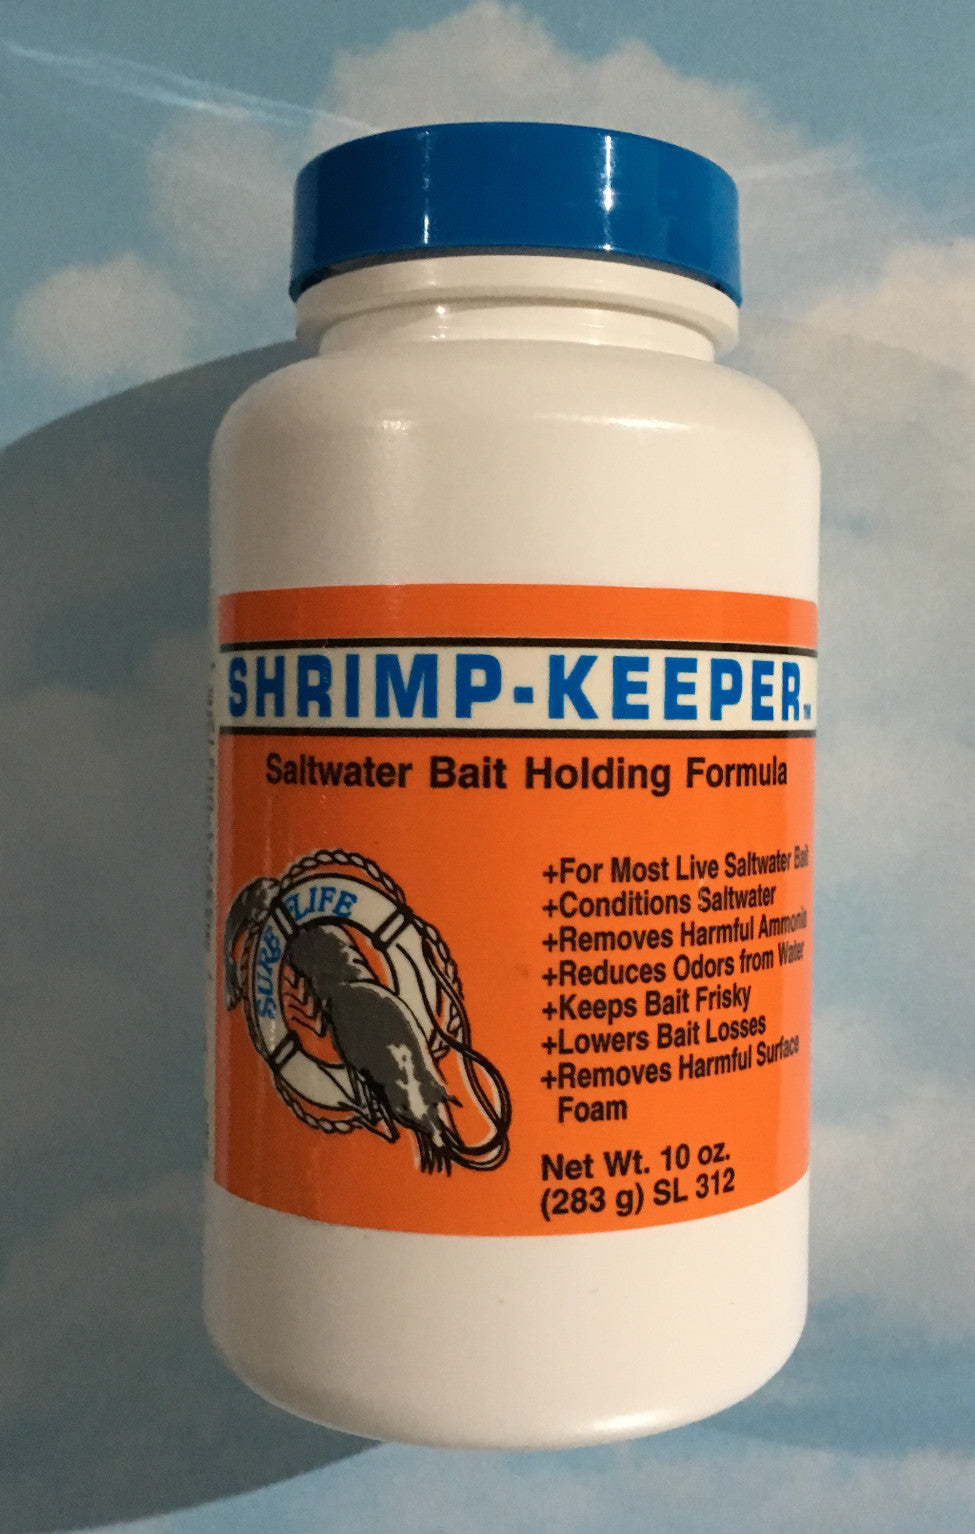 Shrimp Keeper - Saltwater Bait Holding Formula by Sure Life